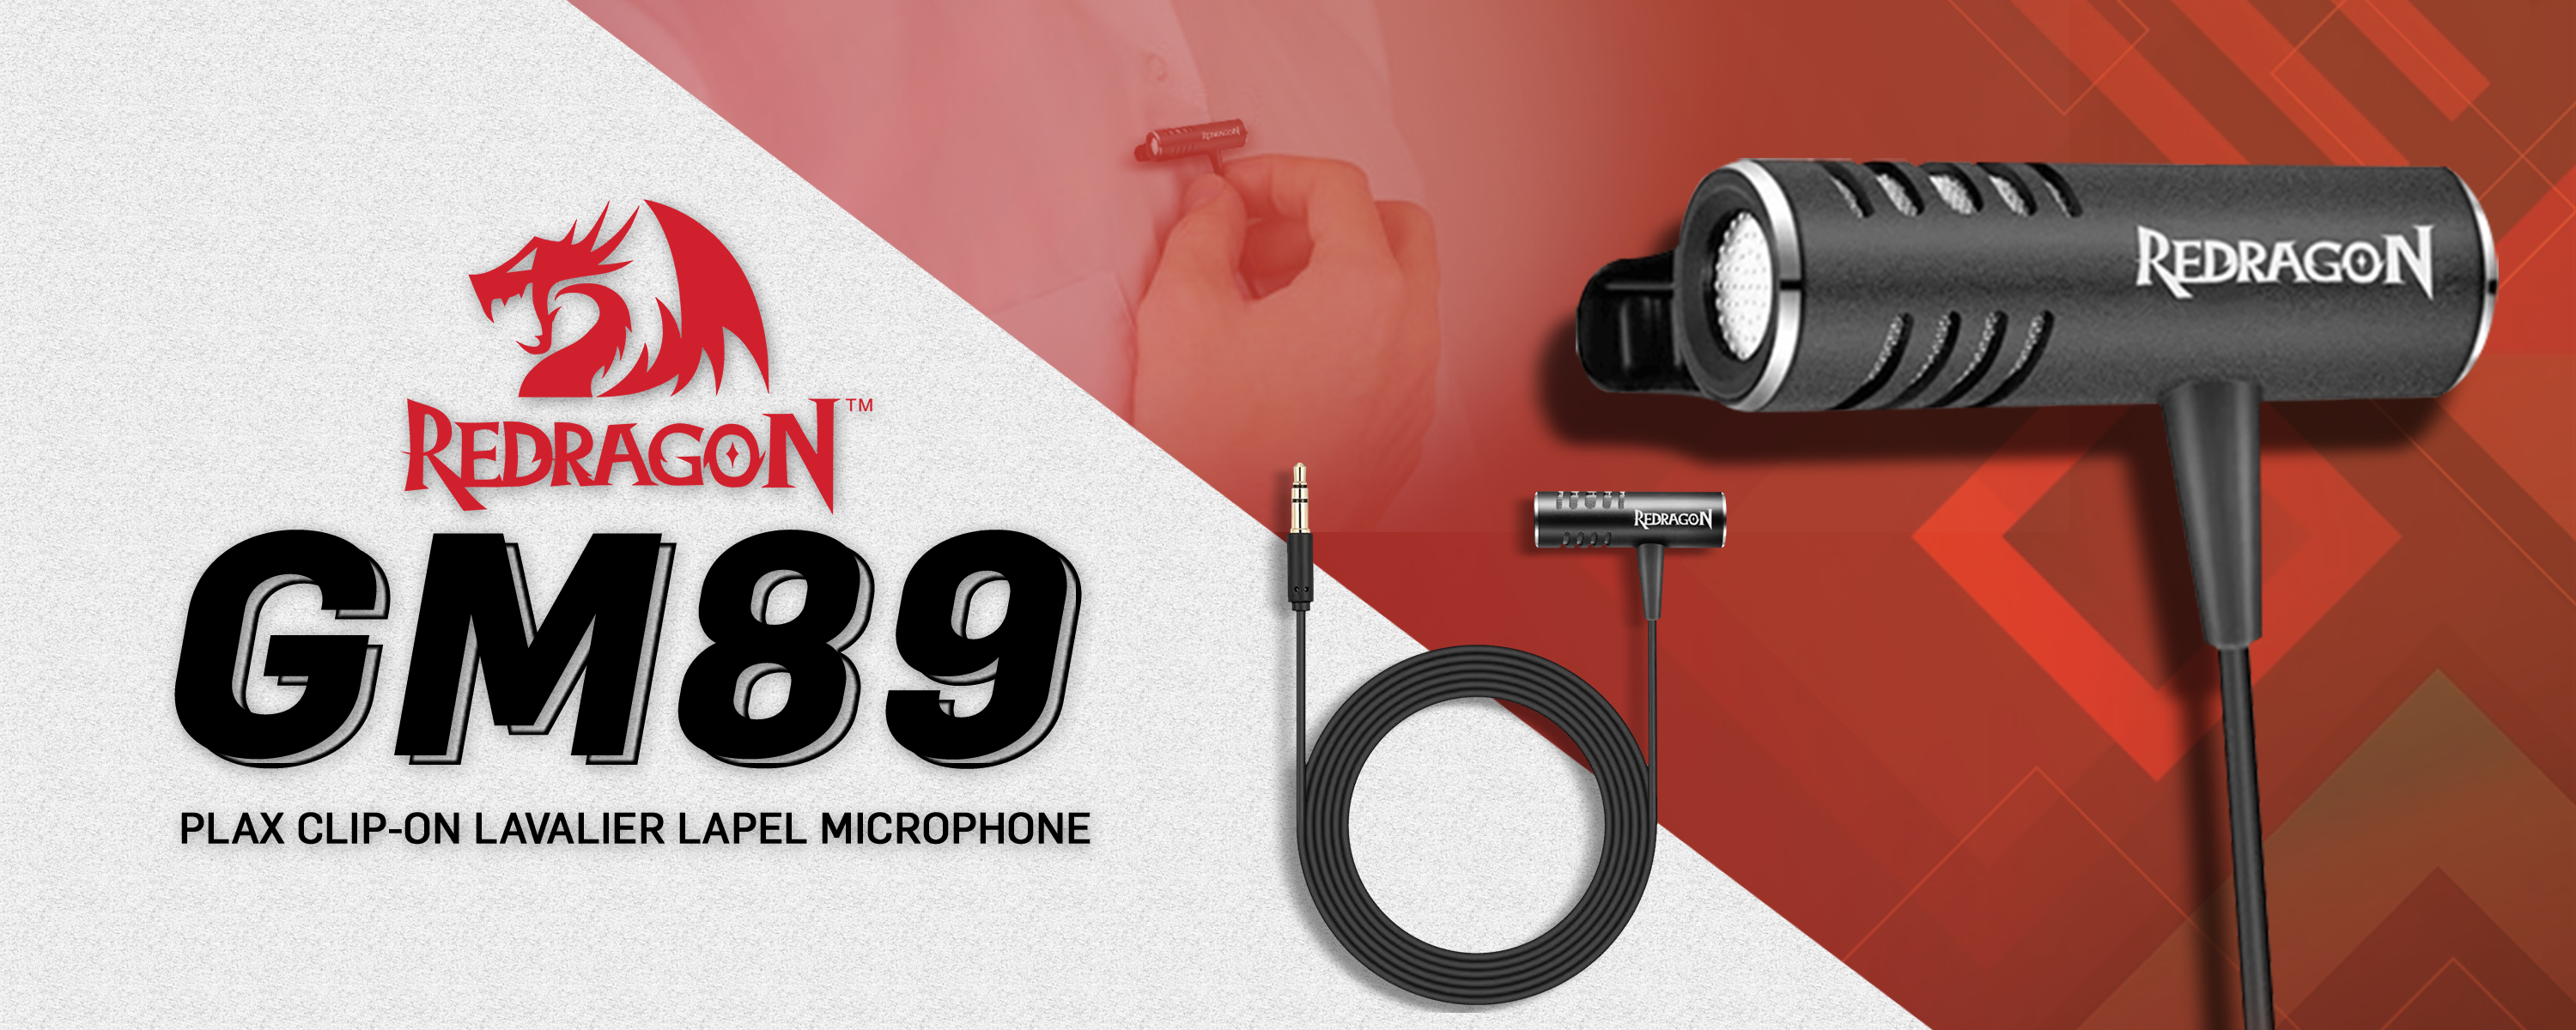 Redragon Gm 89 Plax, Clip-on Lavalier Lapel Microphone